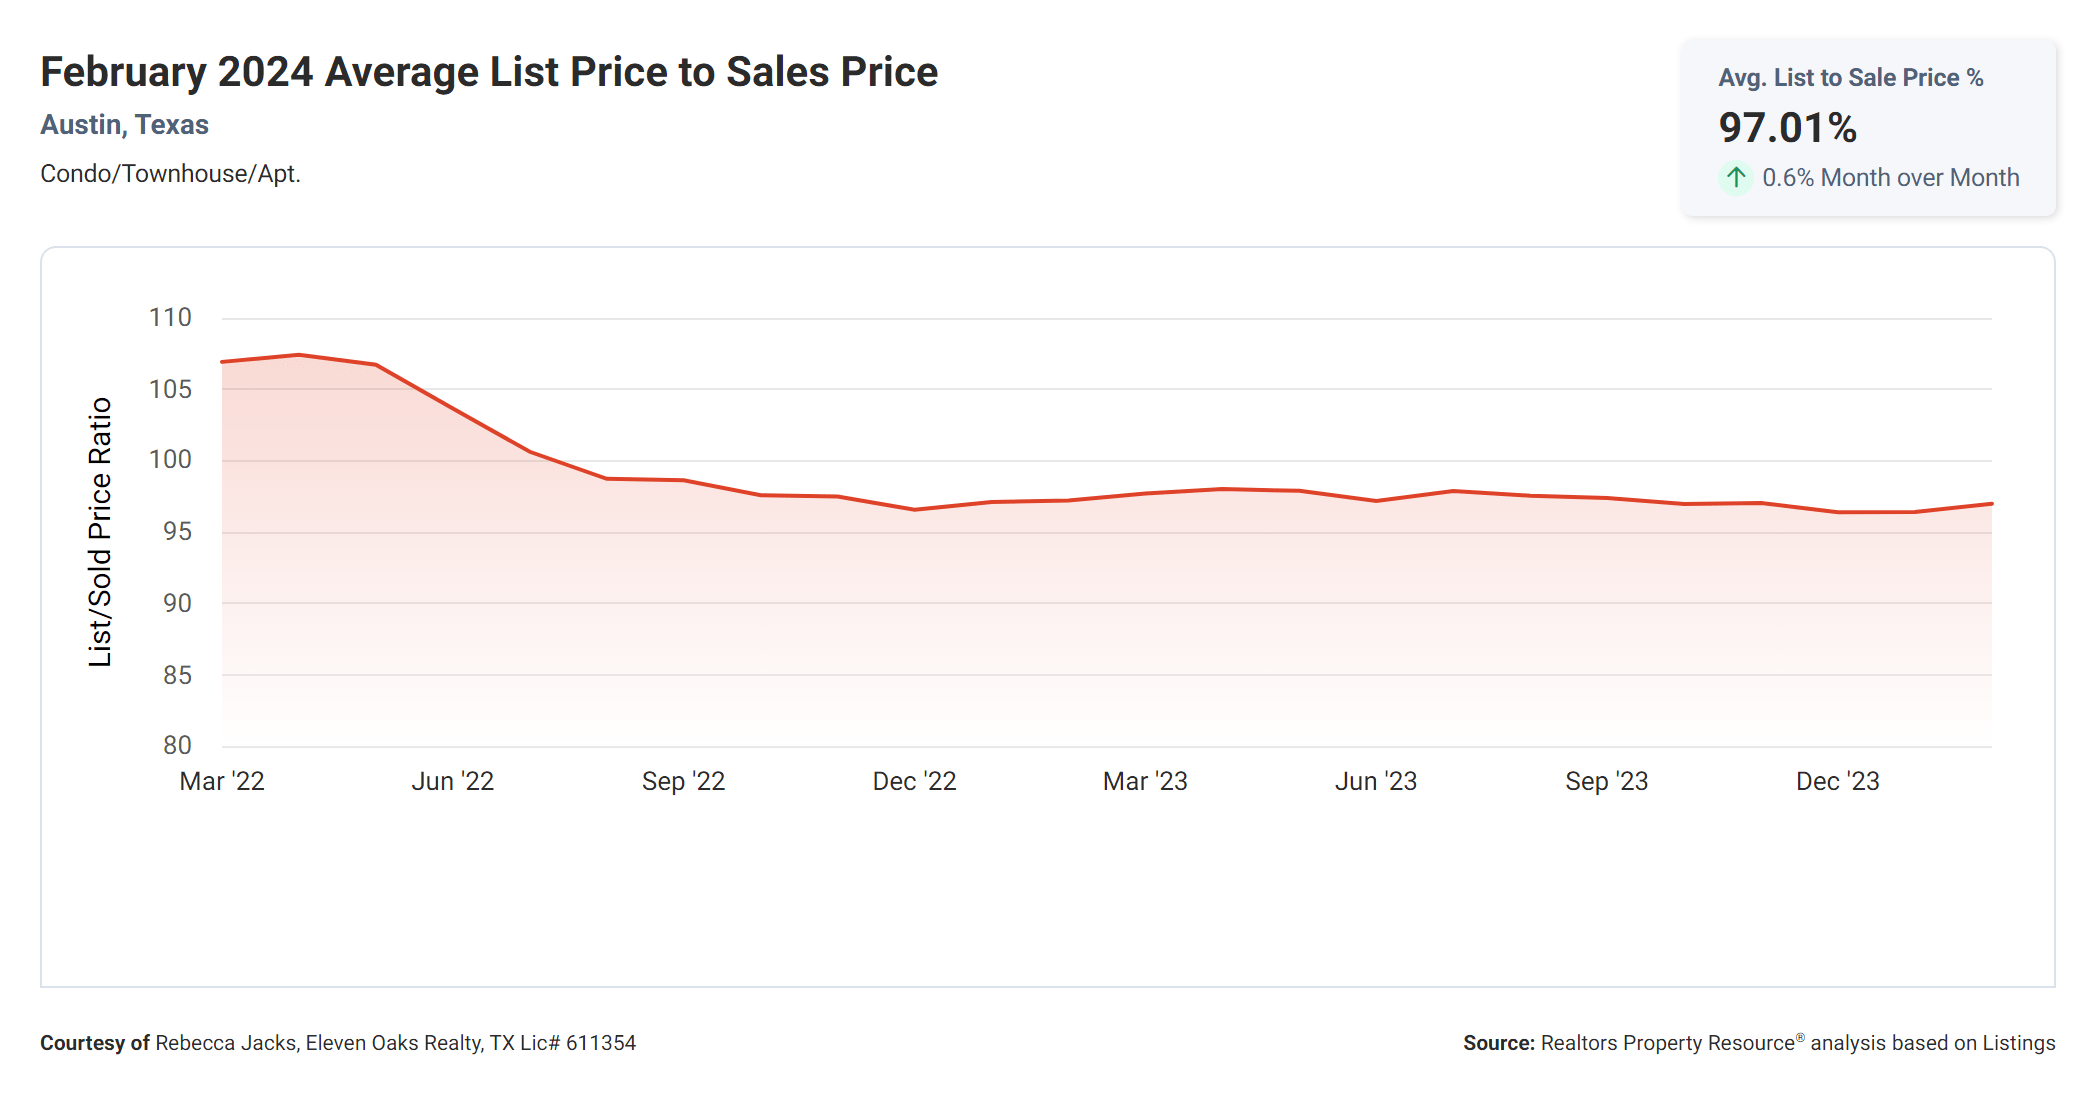 February 2024 Austin tx condos average list price to sales price